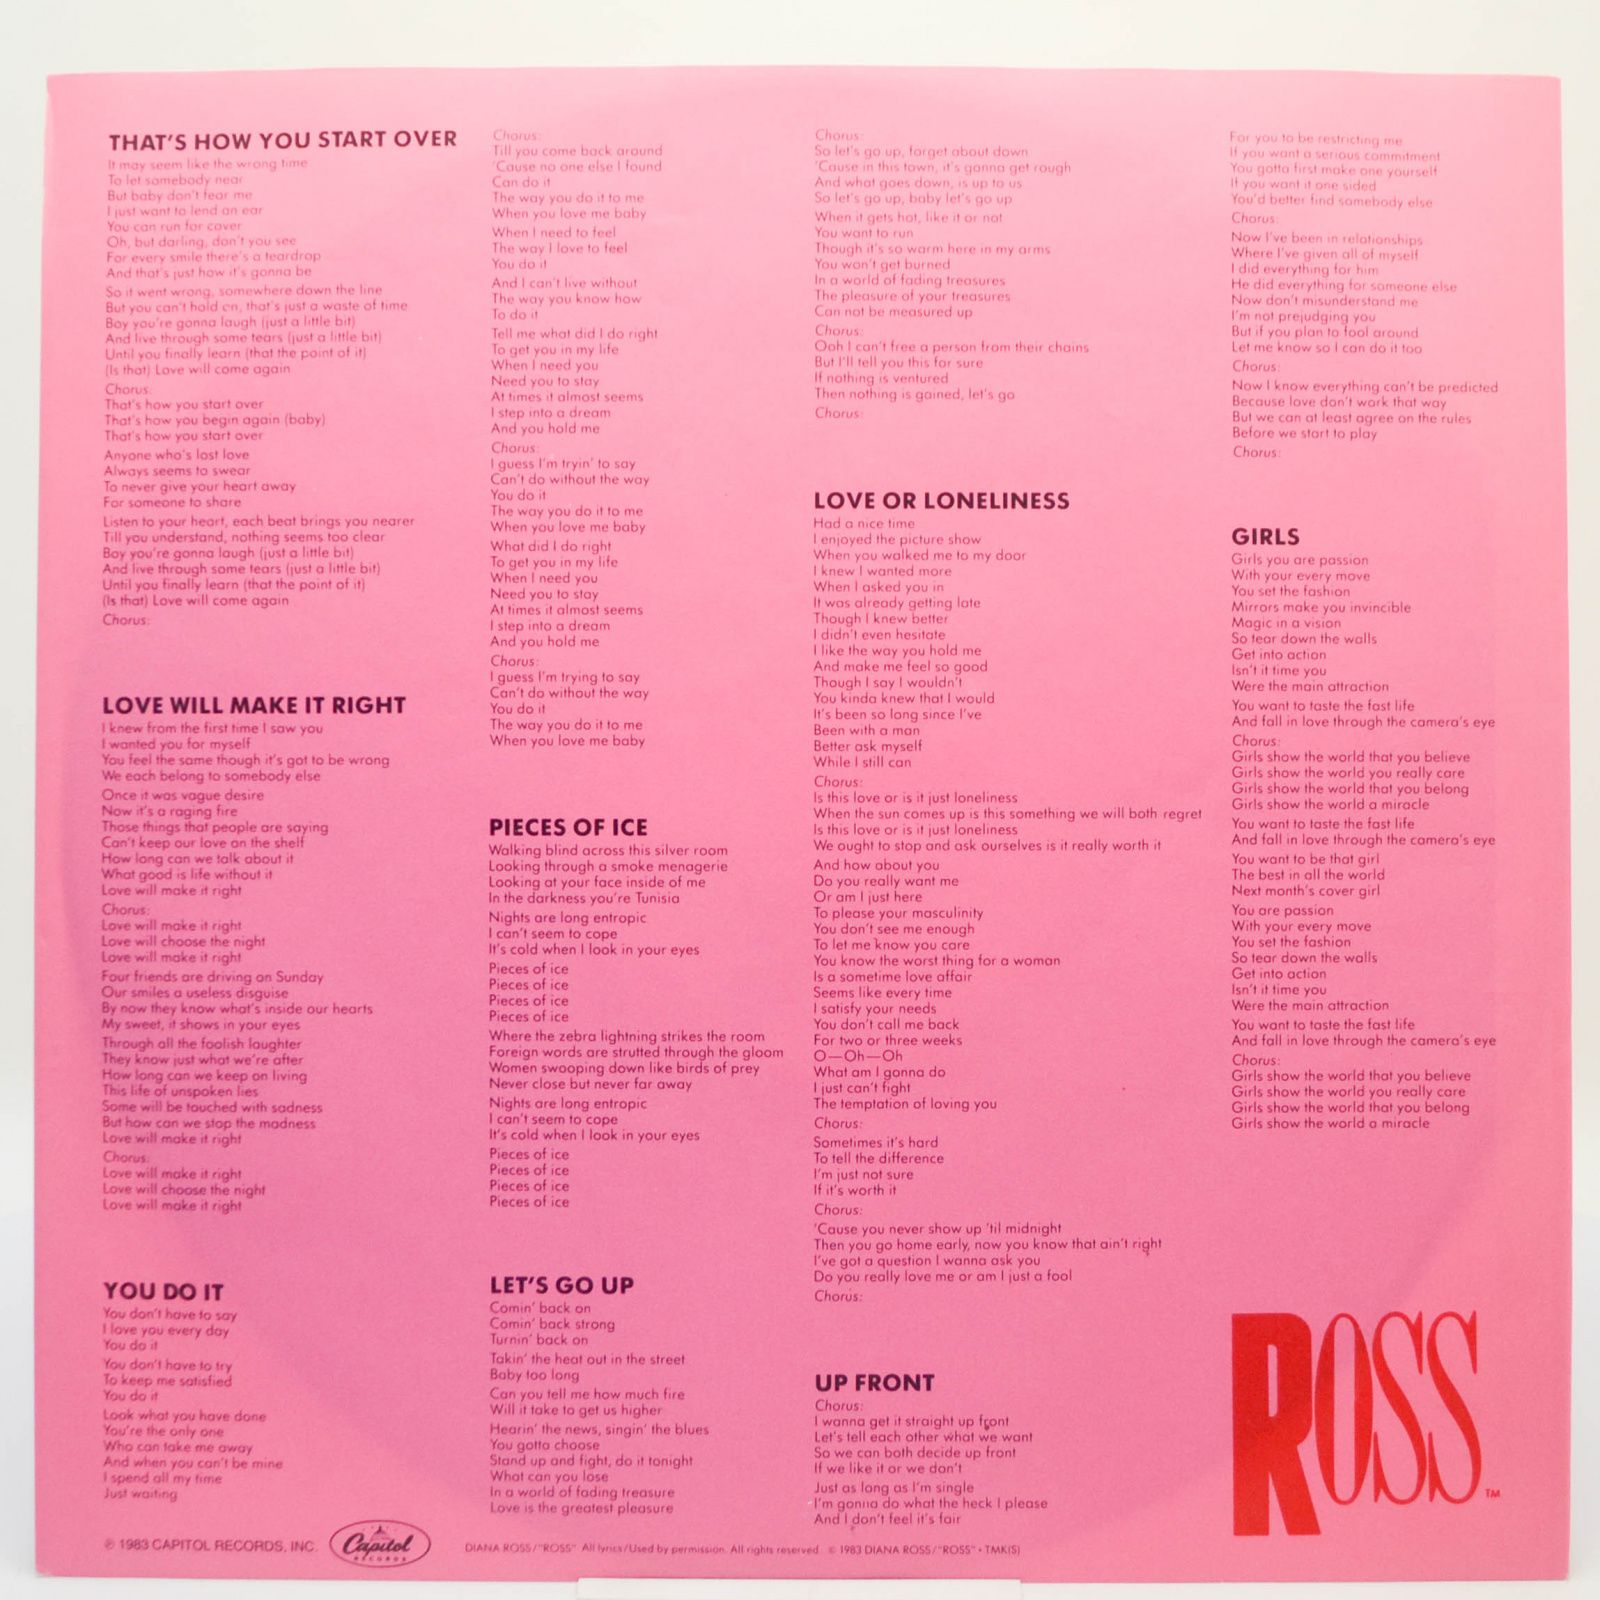 Diana Ross — Ross, 1983